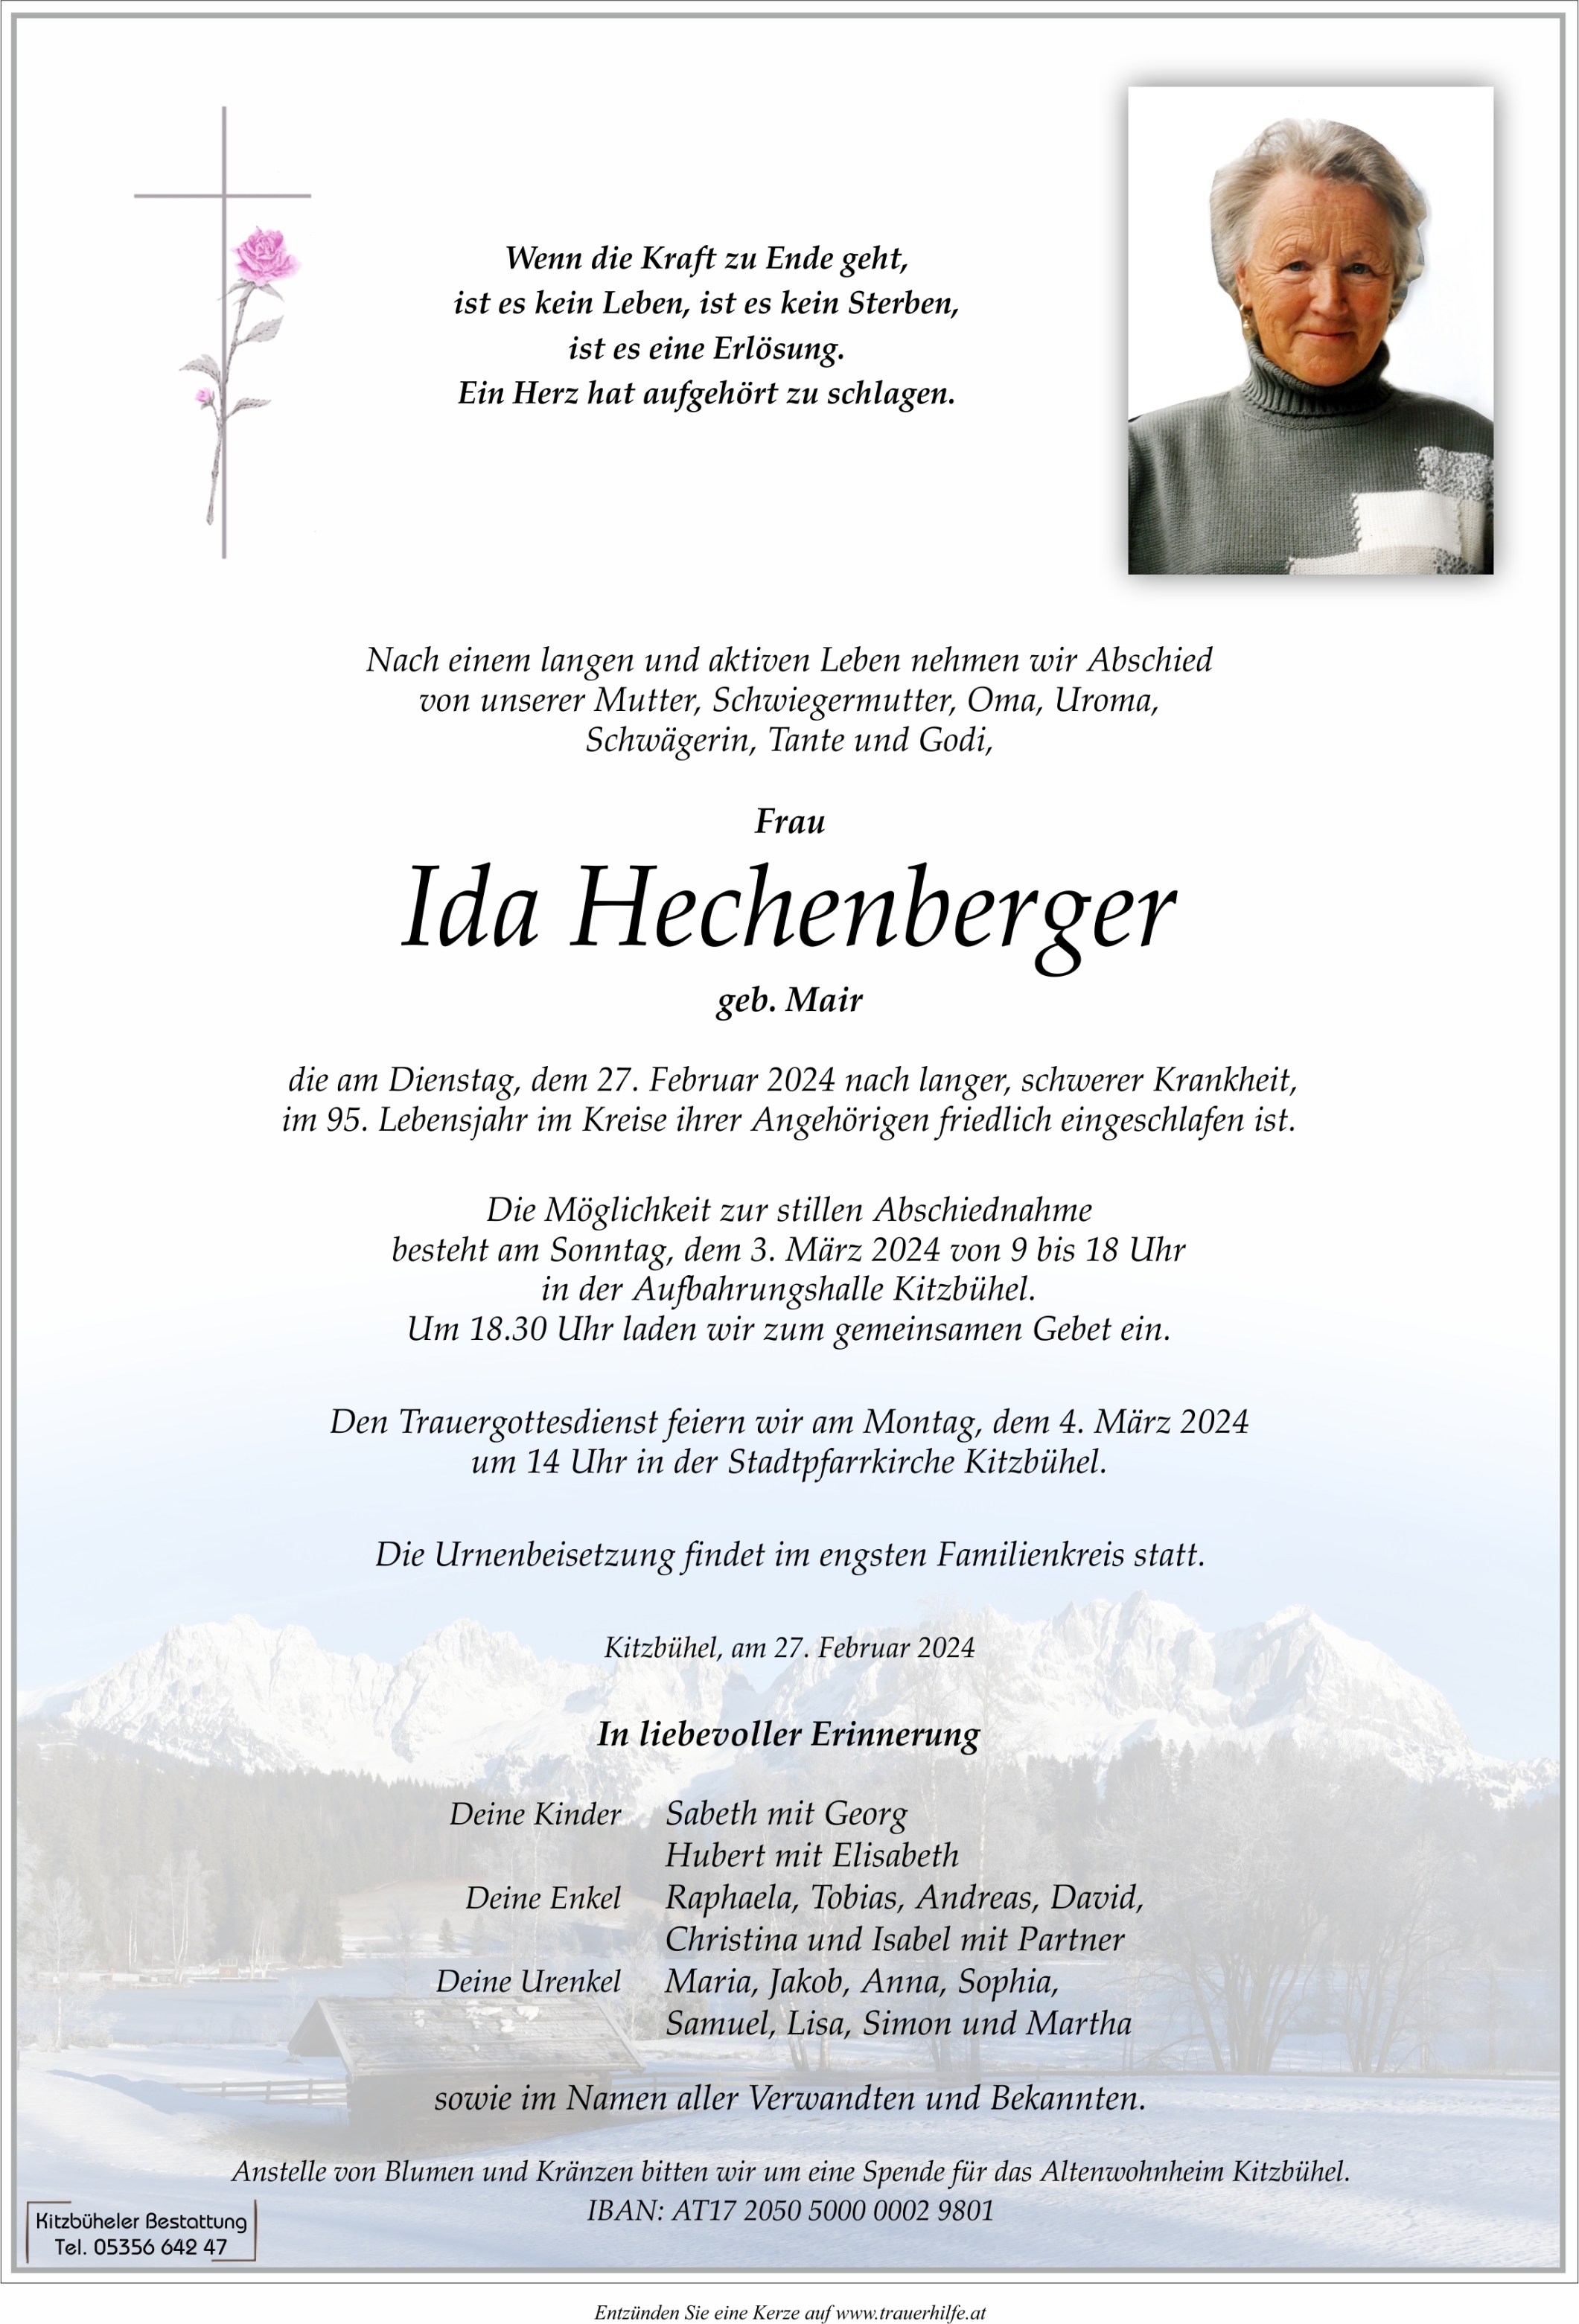 Ida Hechenberger